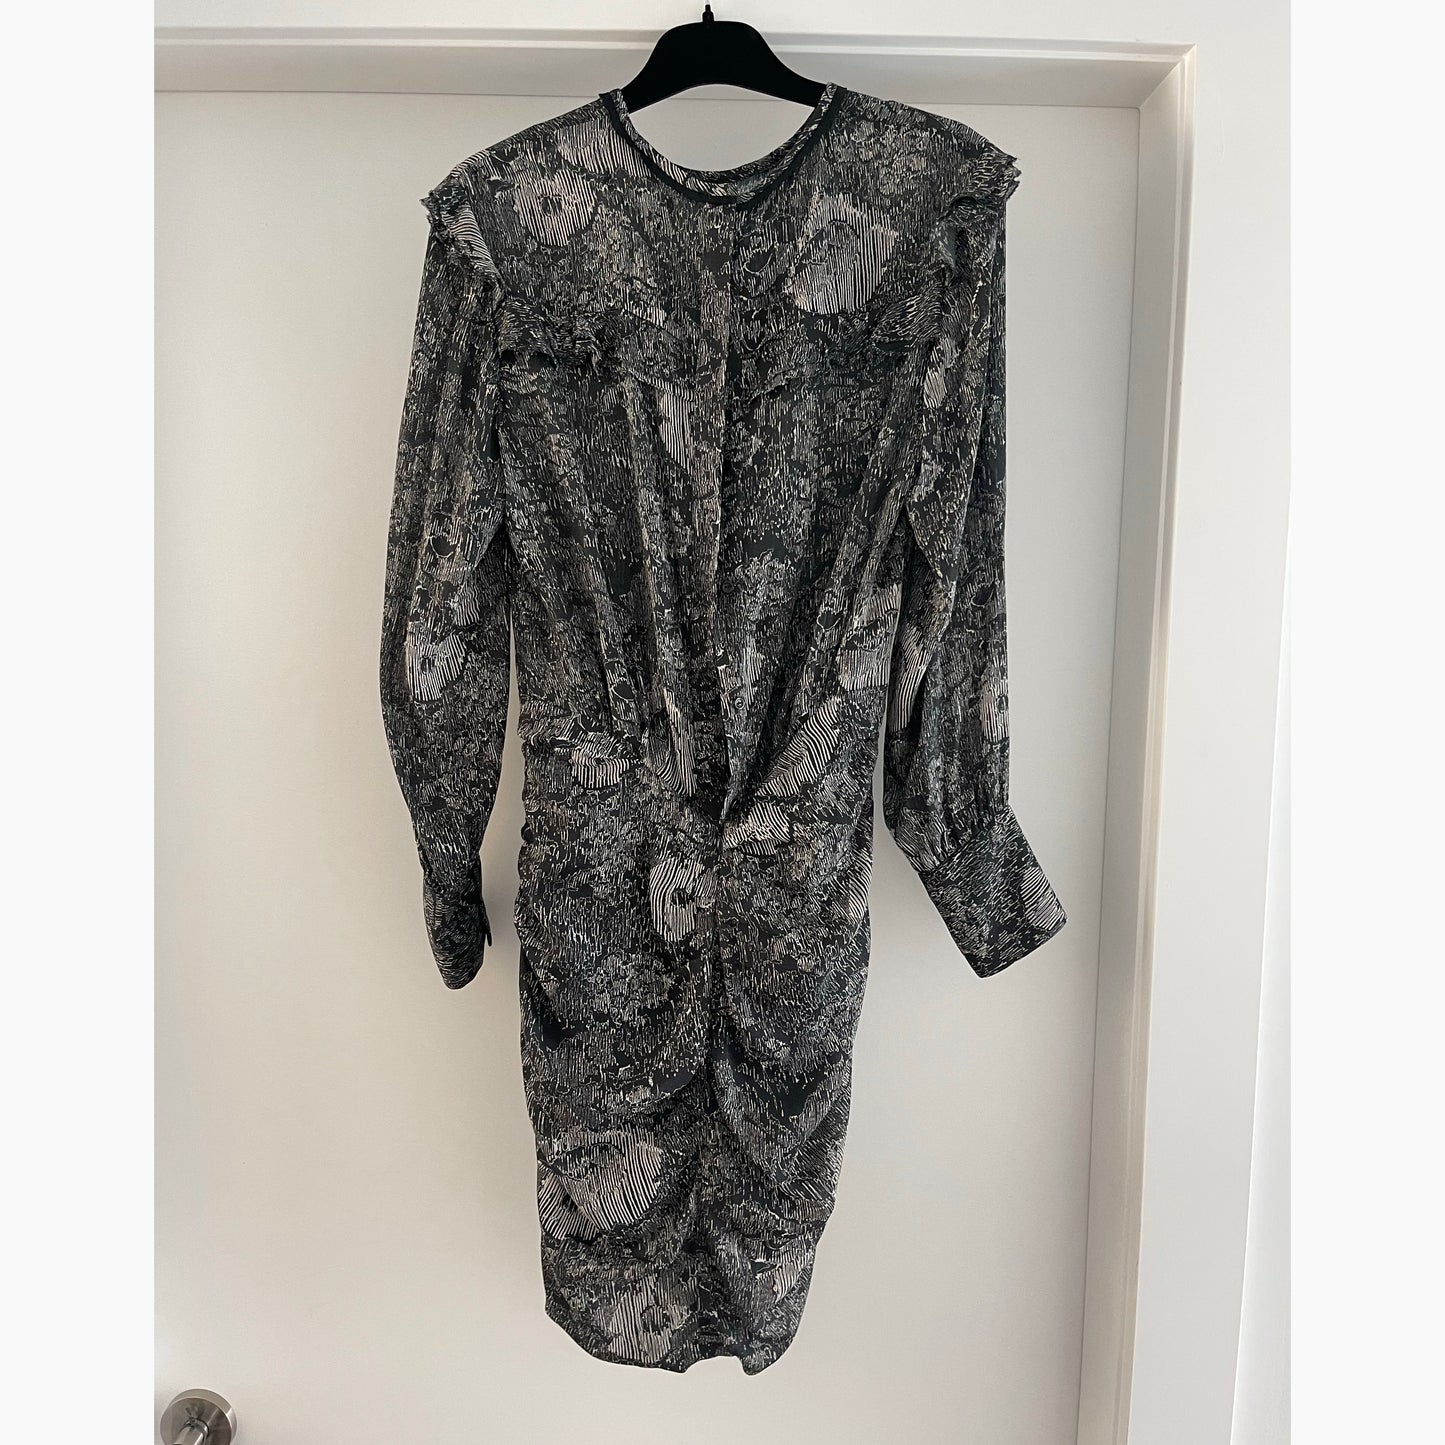 Isabel Marant "IRVIN" Printed Silk Dress, size 38 (fits like a slim size 4)